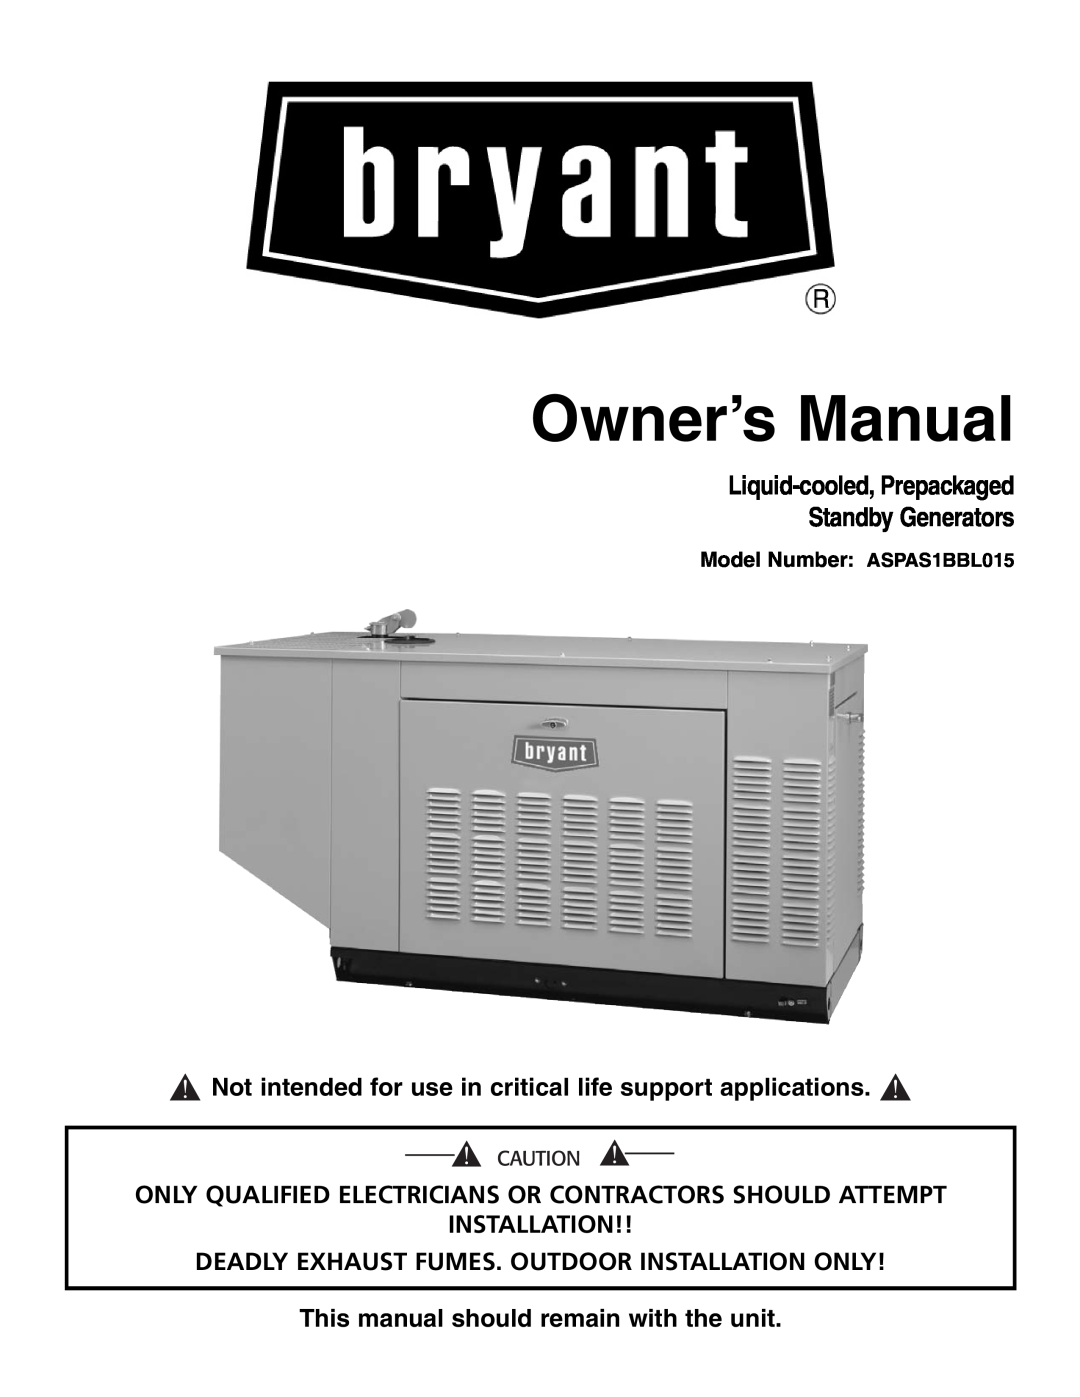 Bryant owner manual Model Number: ASPAS1BBL015, Owner’s Manual, Liquid-cooled,Prepackaged Standby Generators 